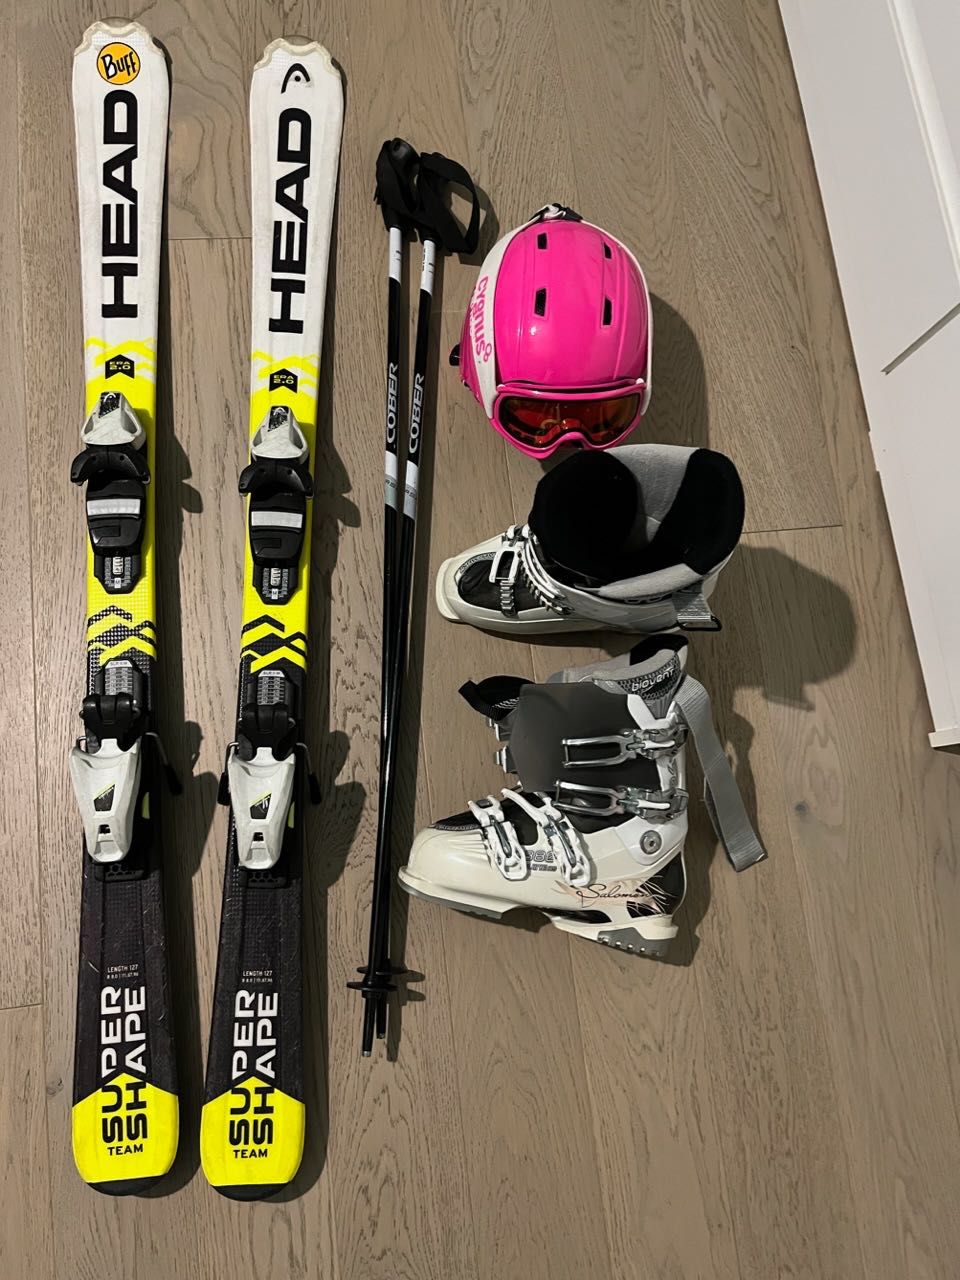 Echipament ski copii • OLX.ro